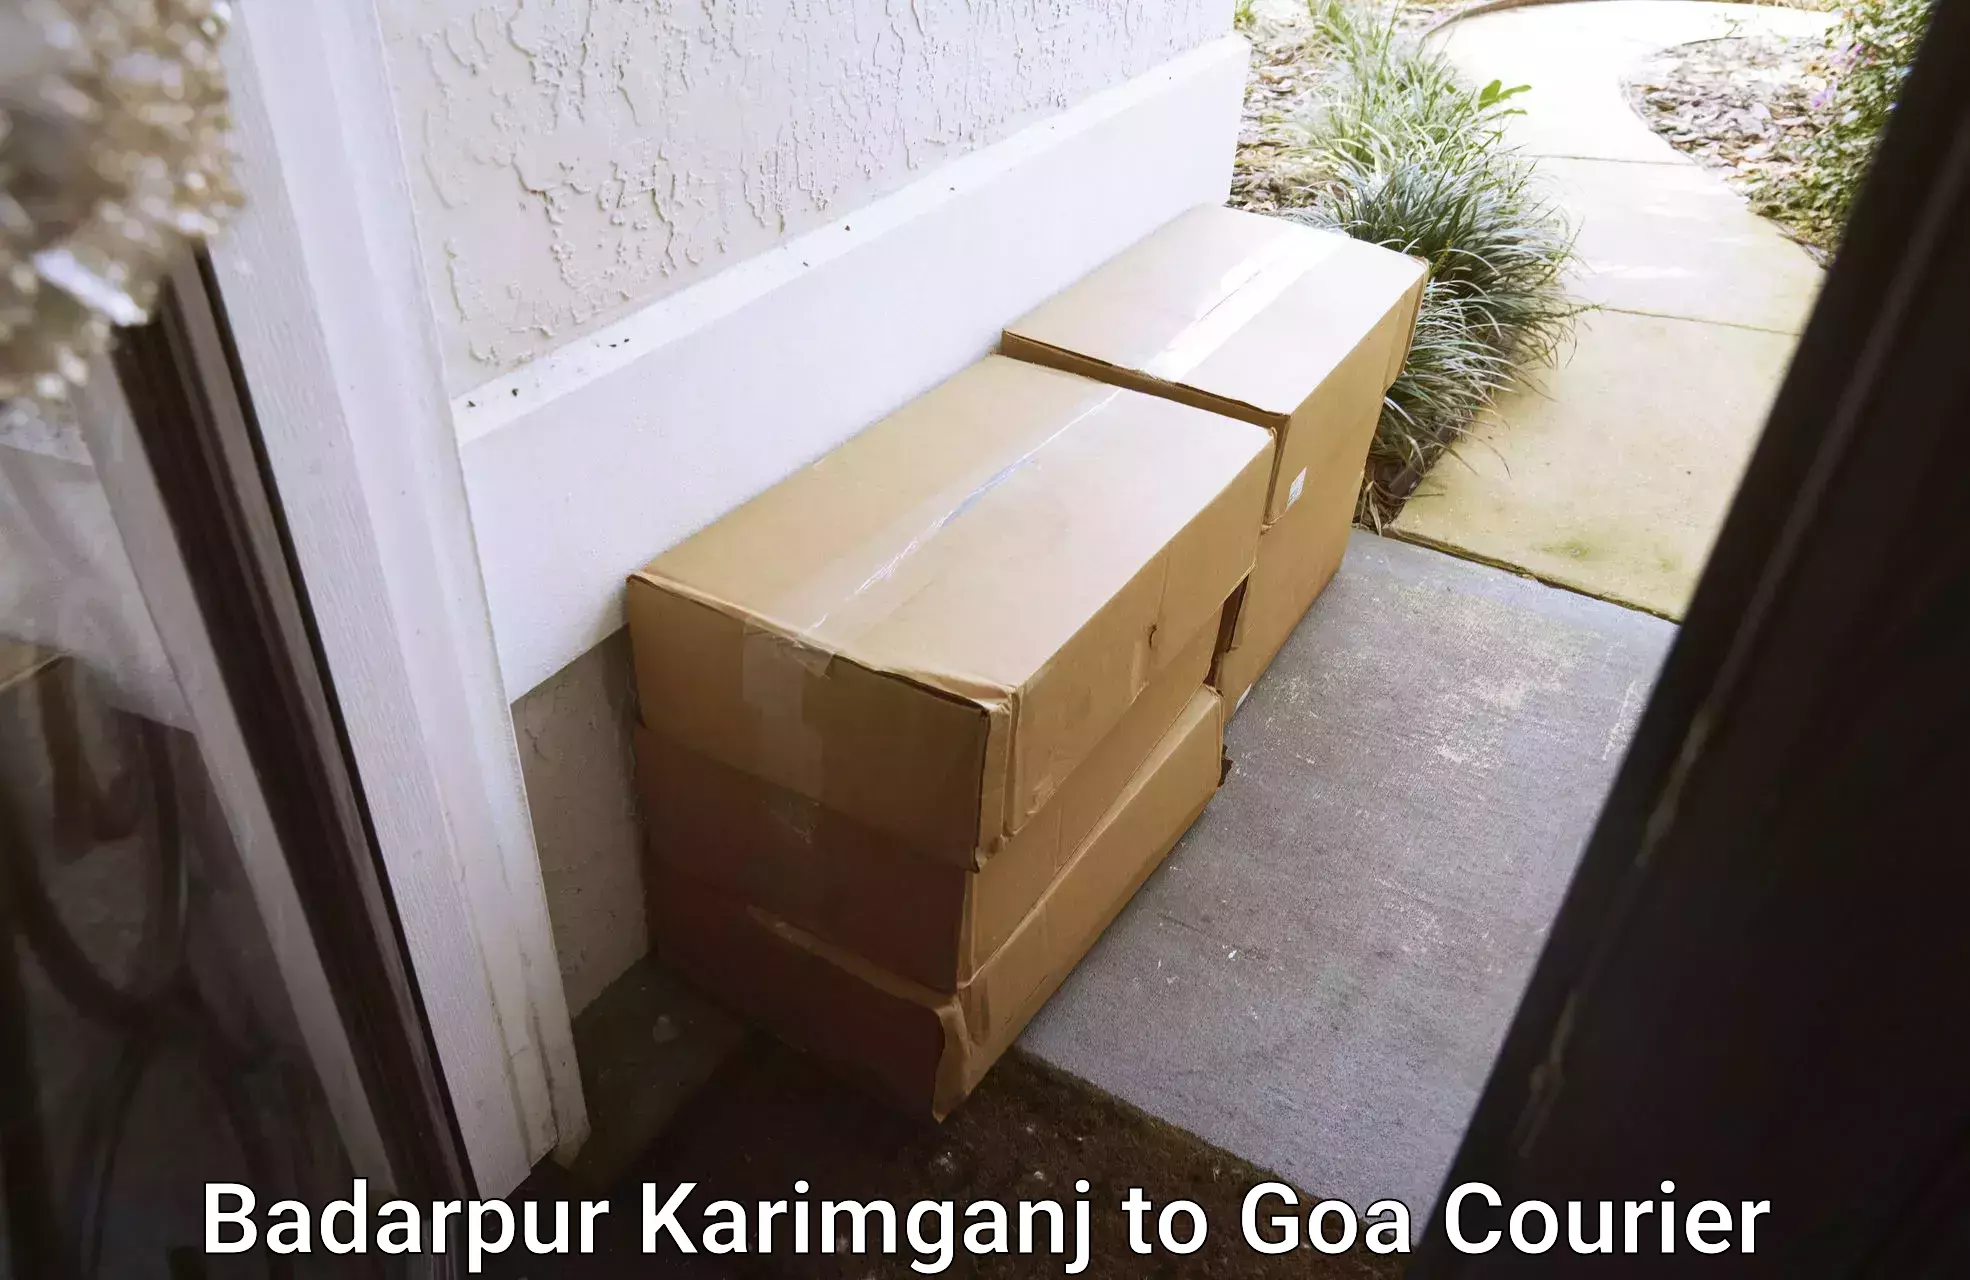 Global courier networks Badarpur Karimganj to Panjim